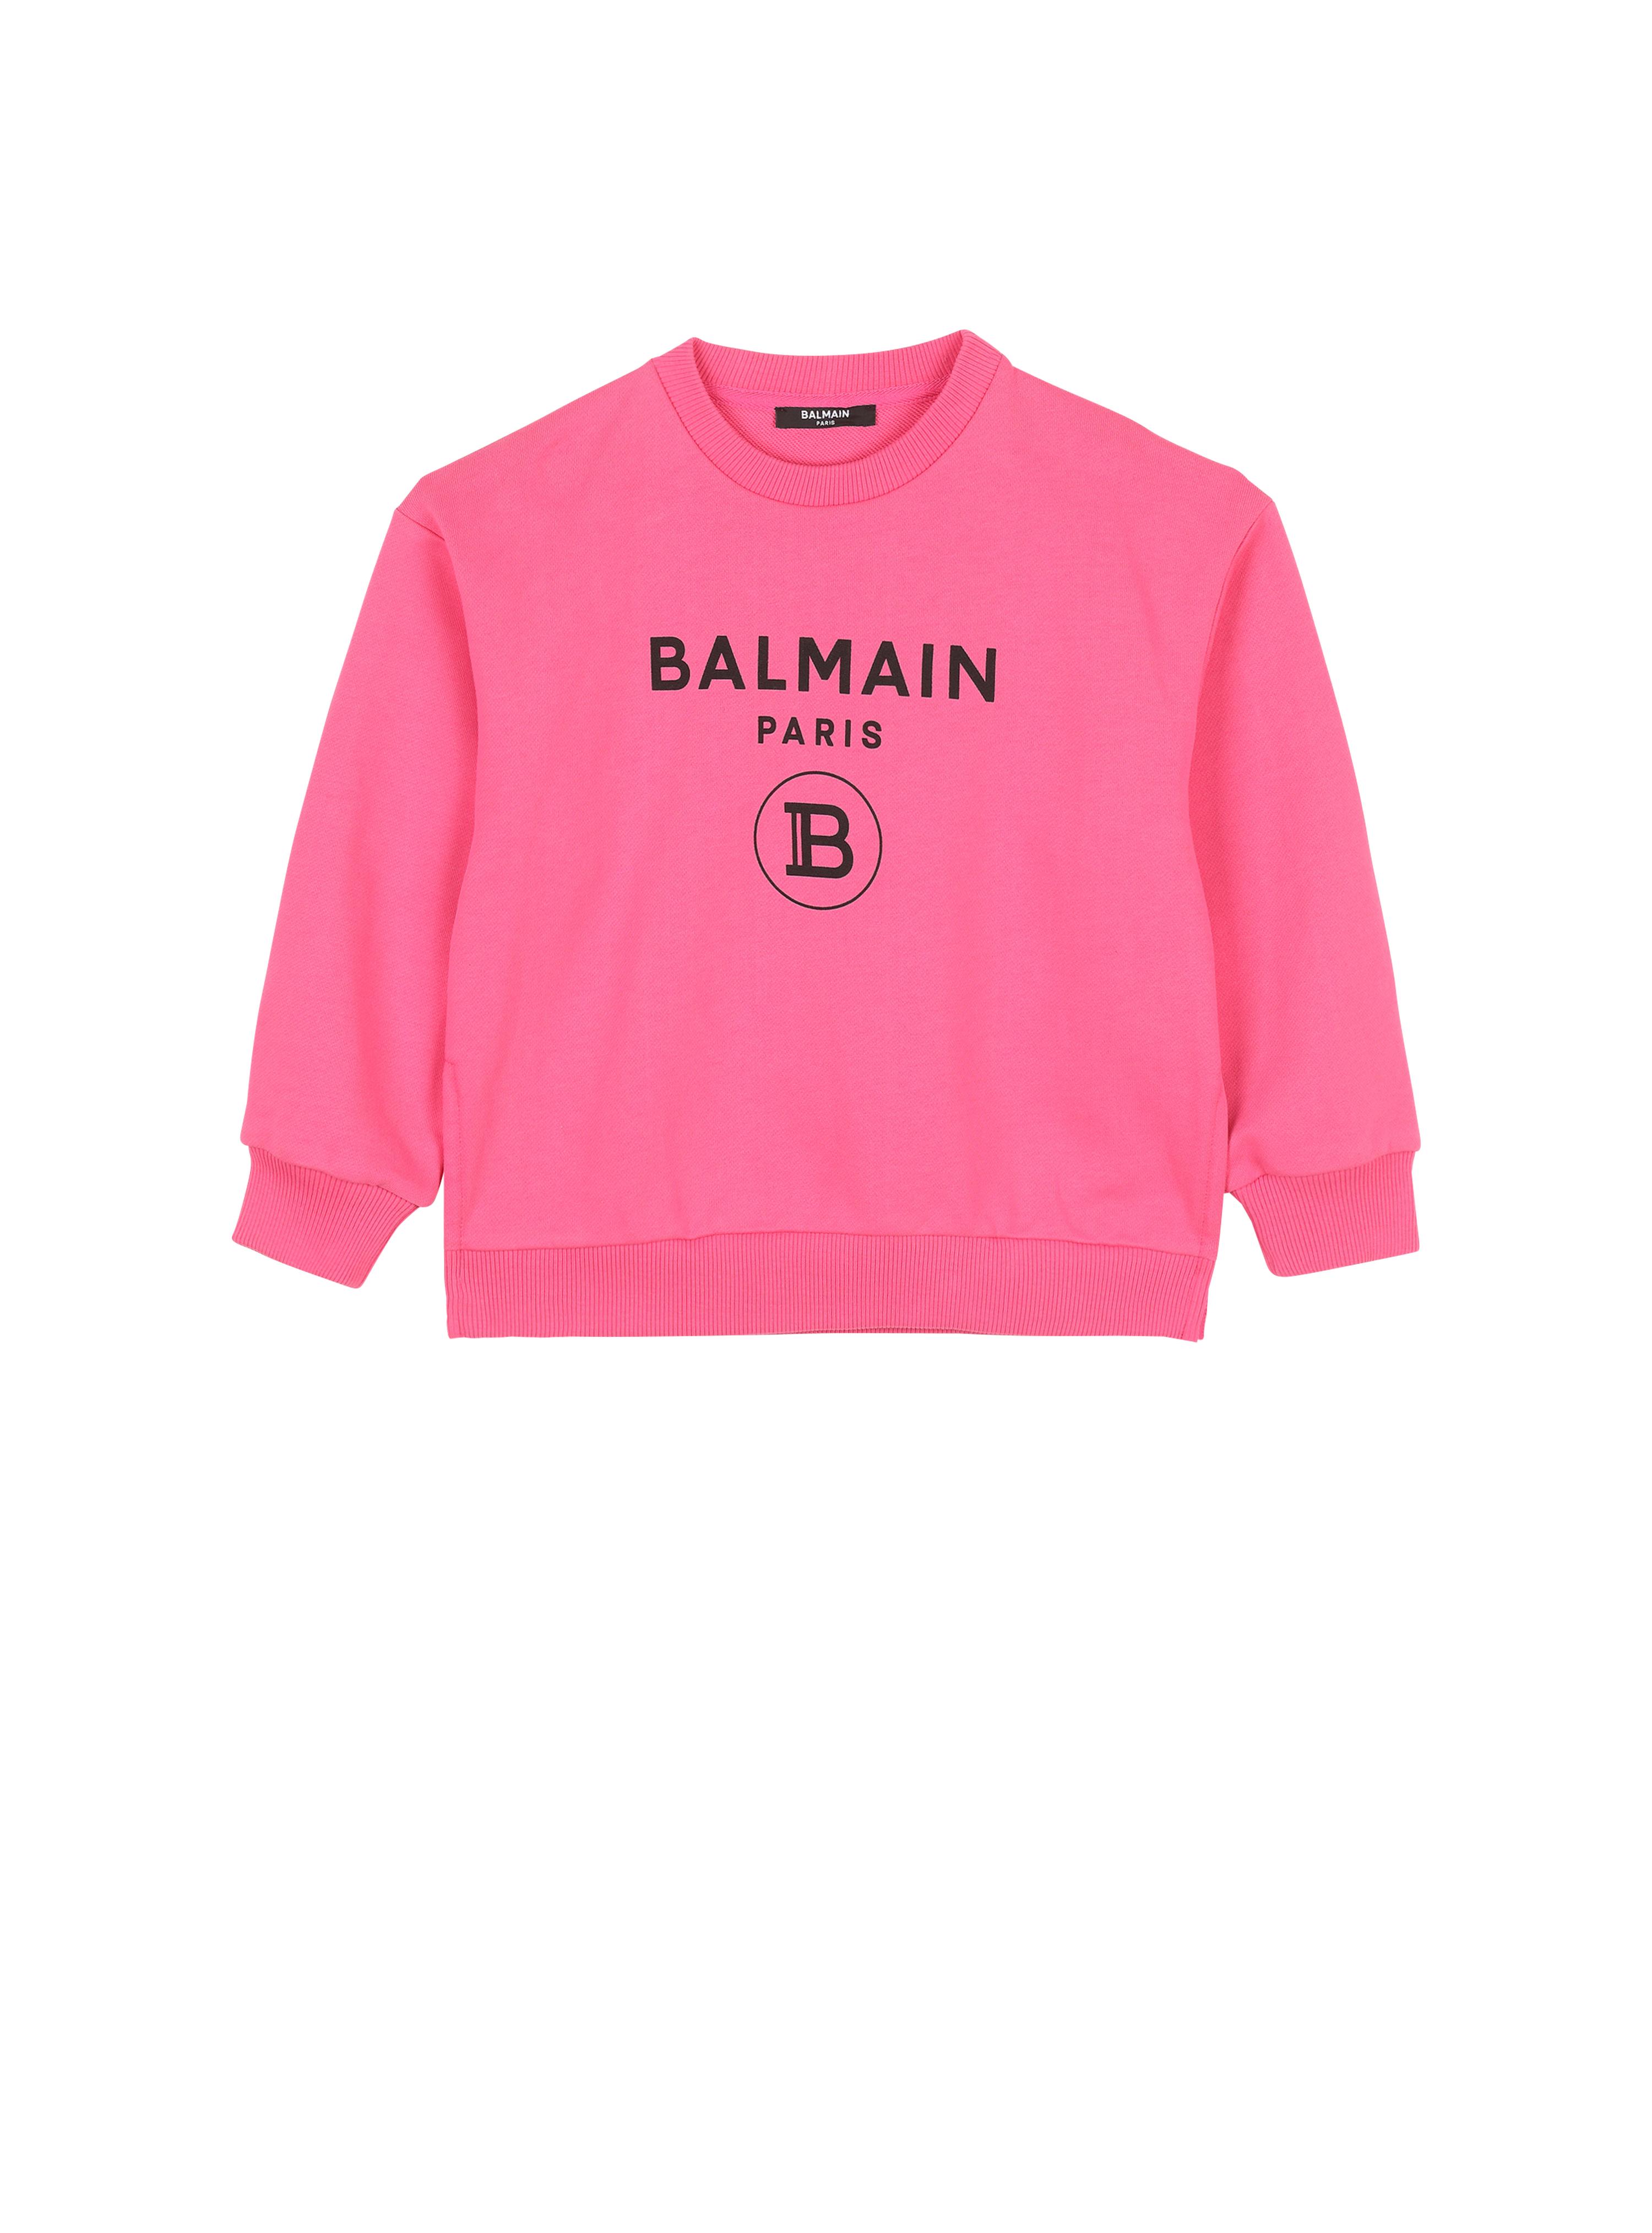 Balmain巴尔曼标志棉质毛衫, pink